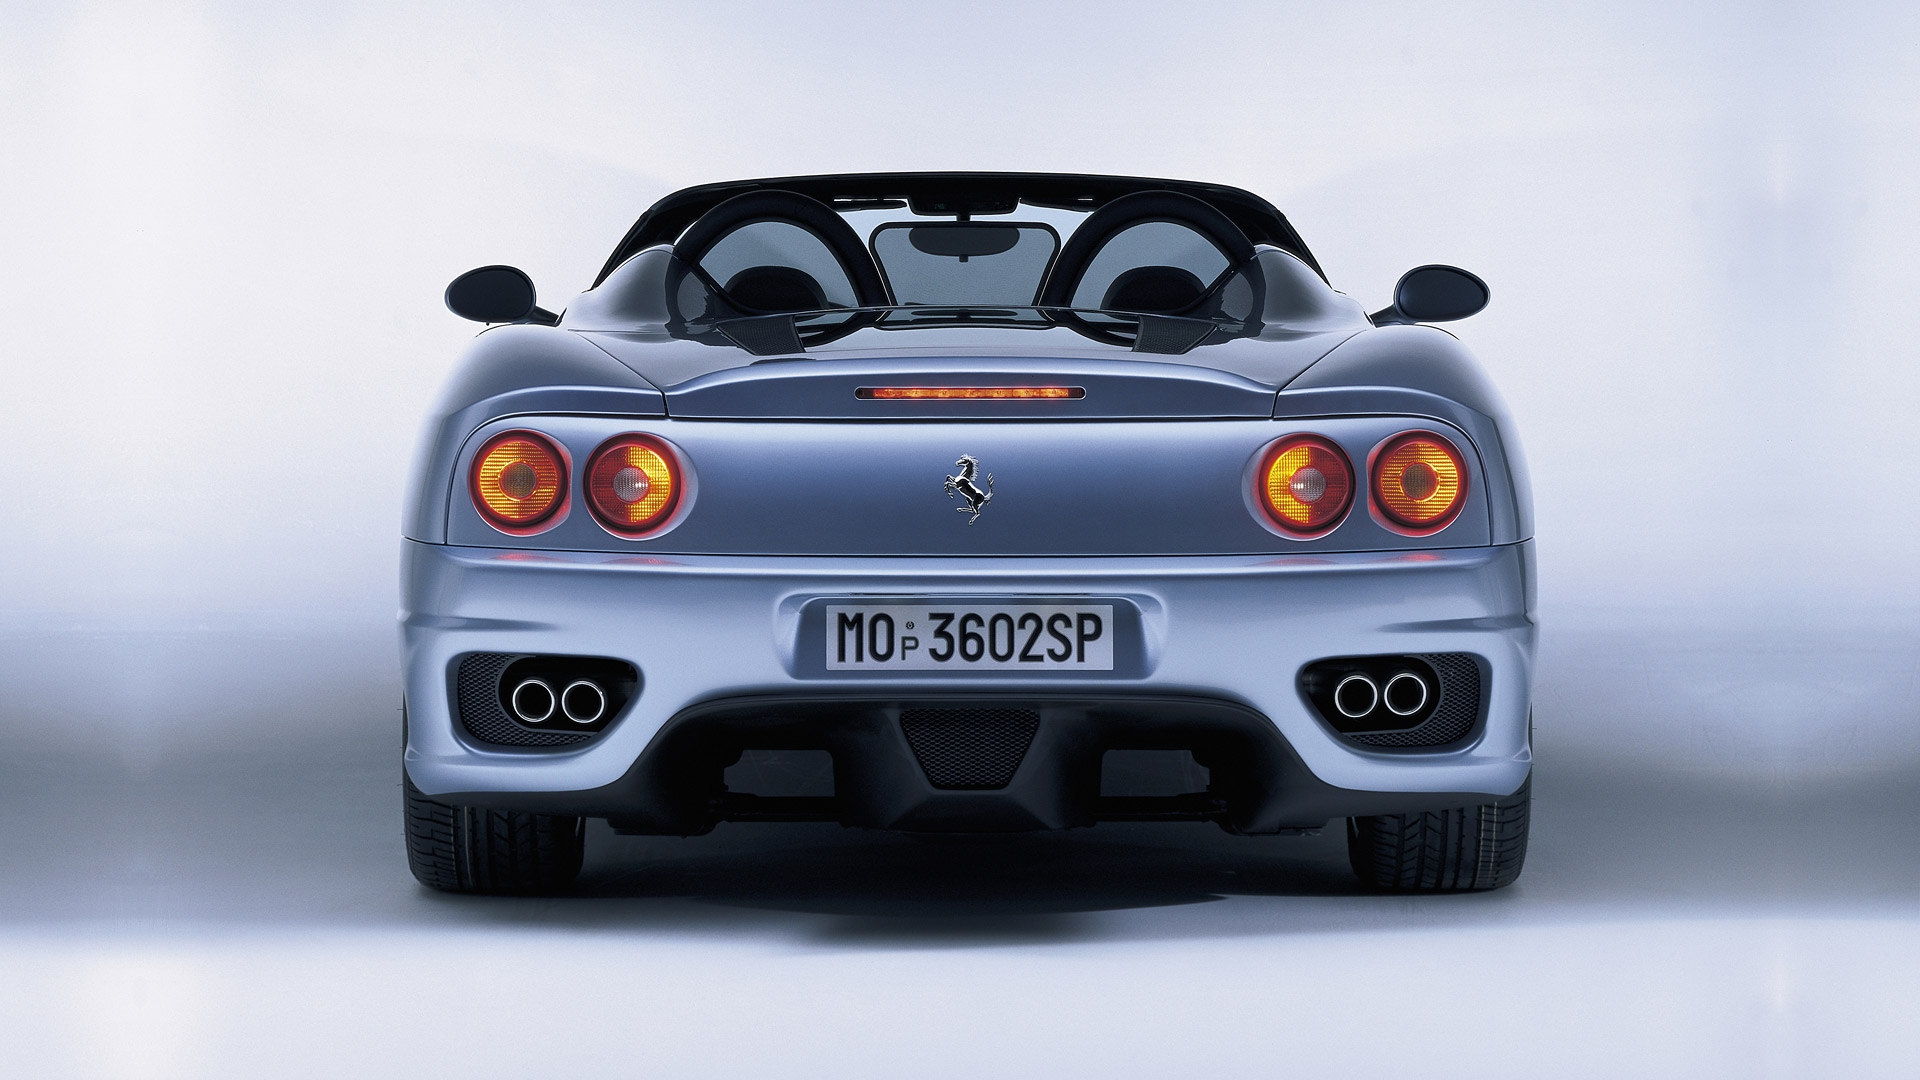  2001 Ferrari 360 Spider Wallpaper.